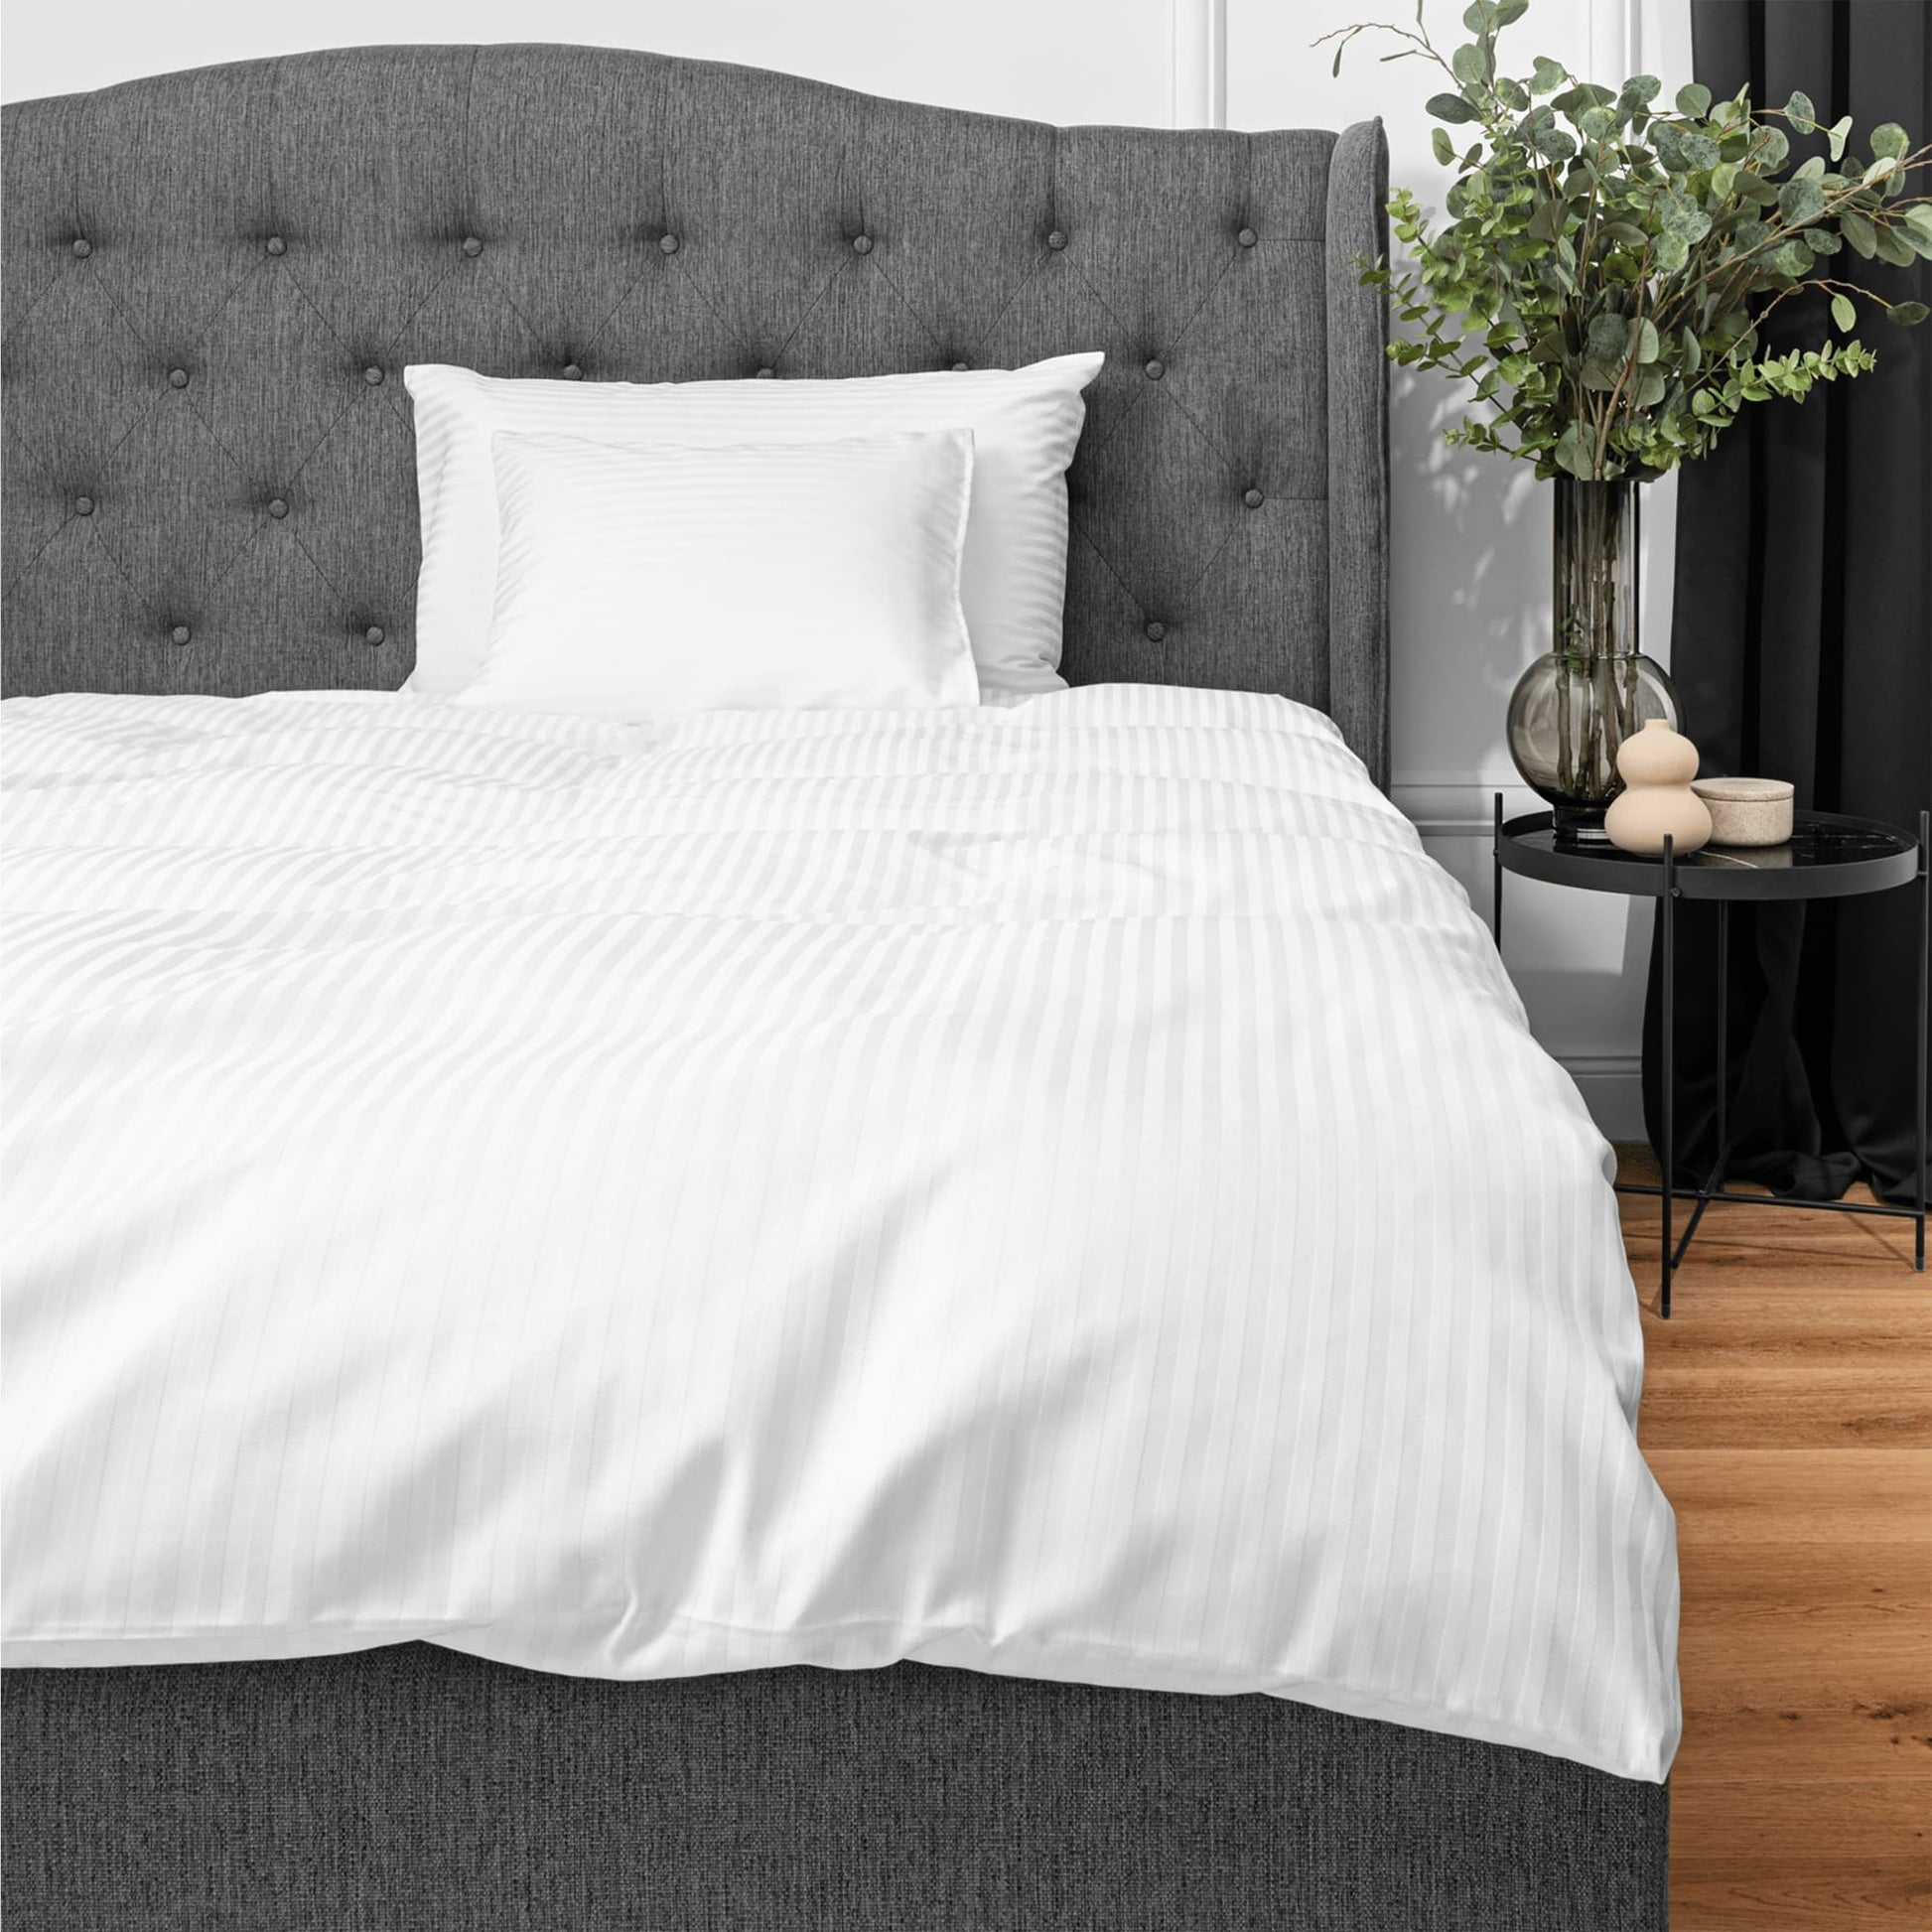 Luxury Sateen Stripe Pillowcase on Bed